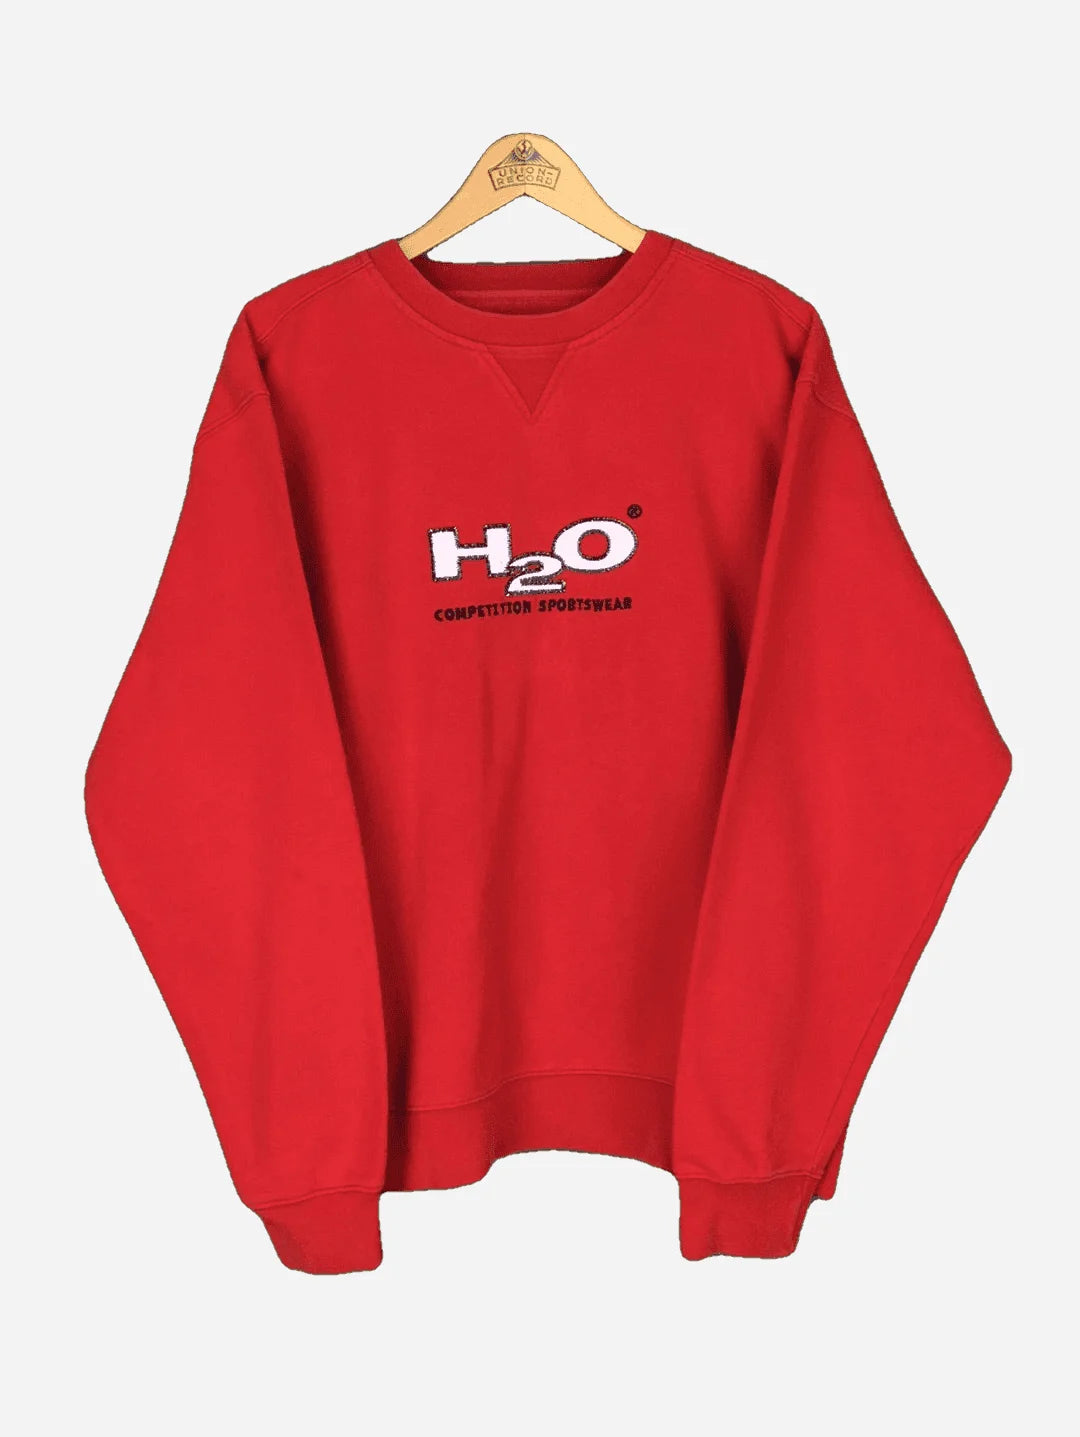 H2O Sweater (XL)